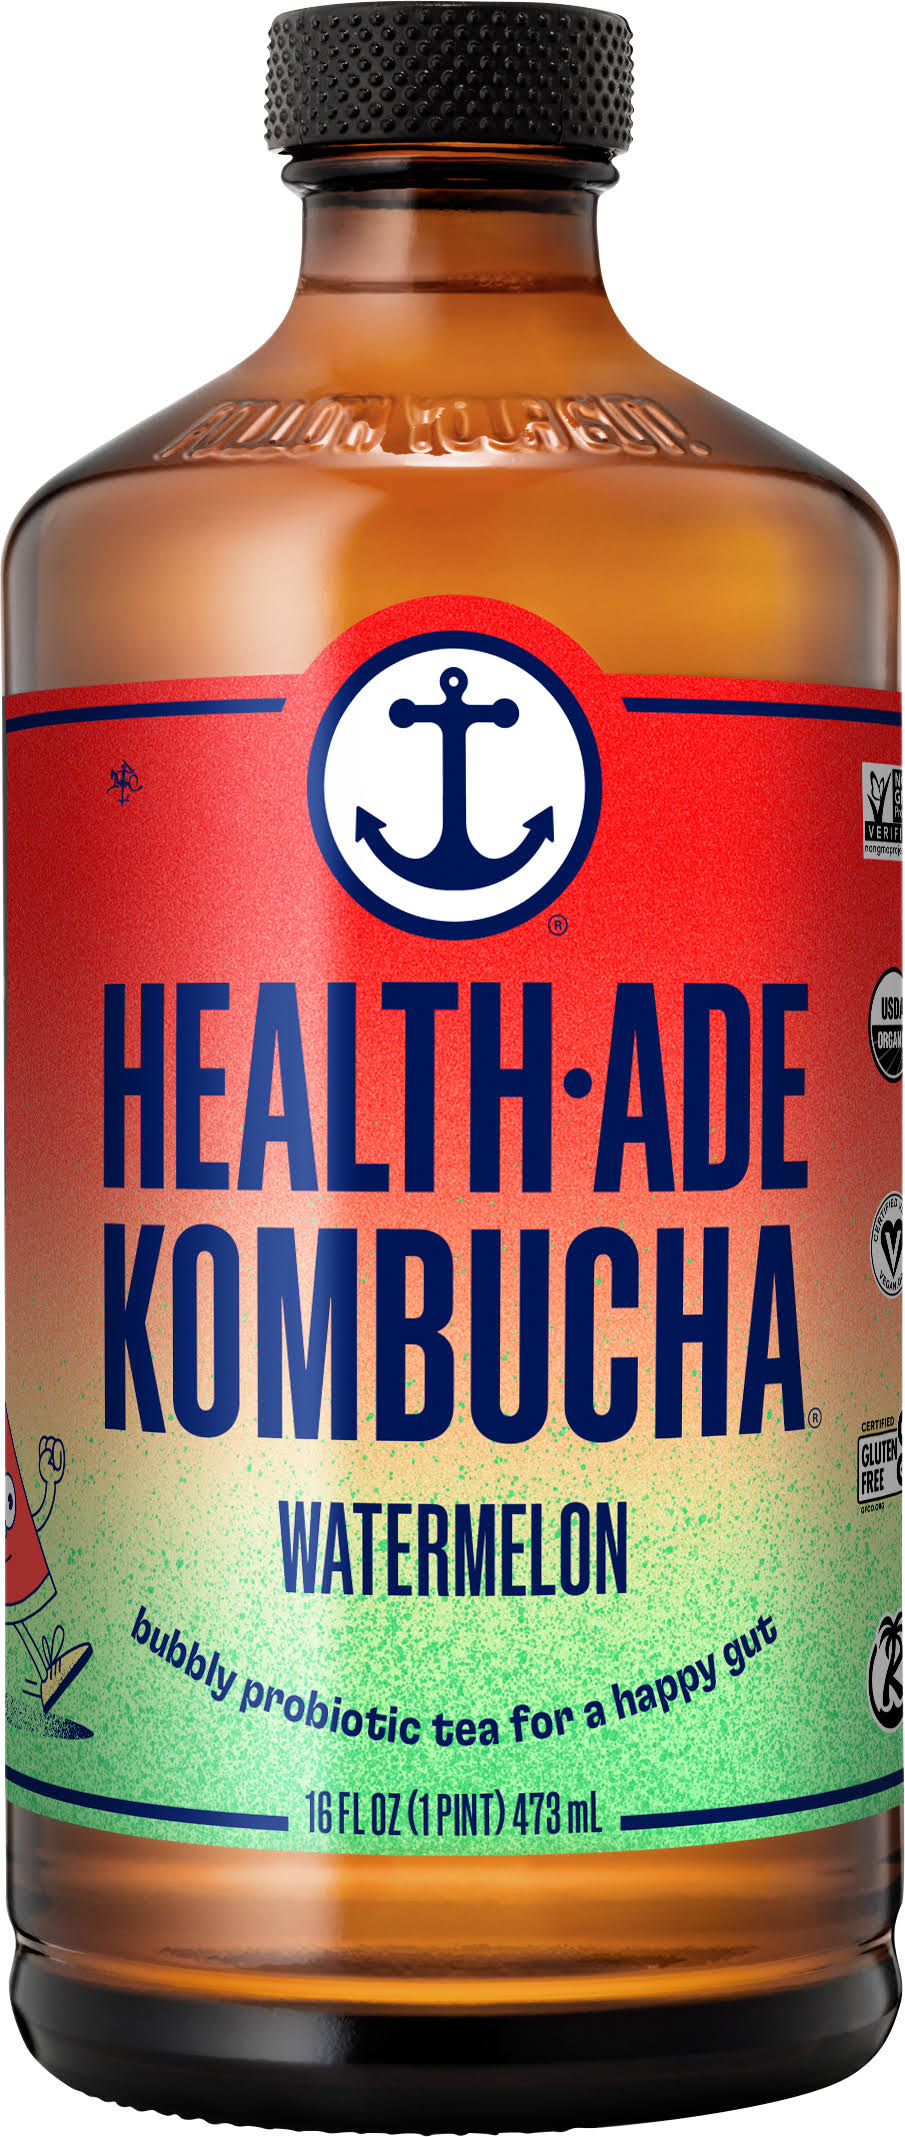 Health-Ade Kombucha, Watermelon - 16 fl oz